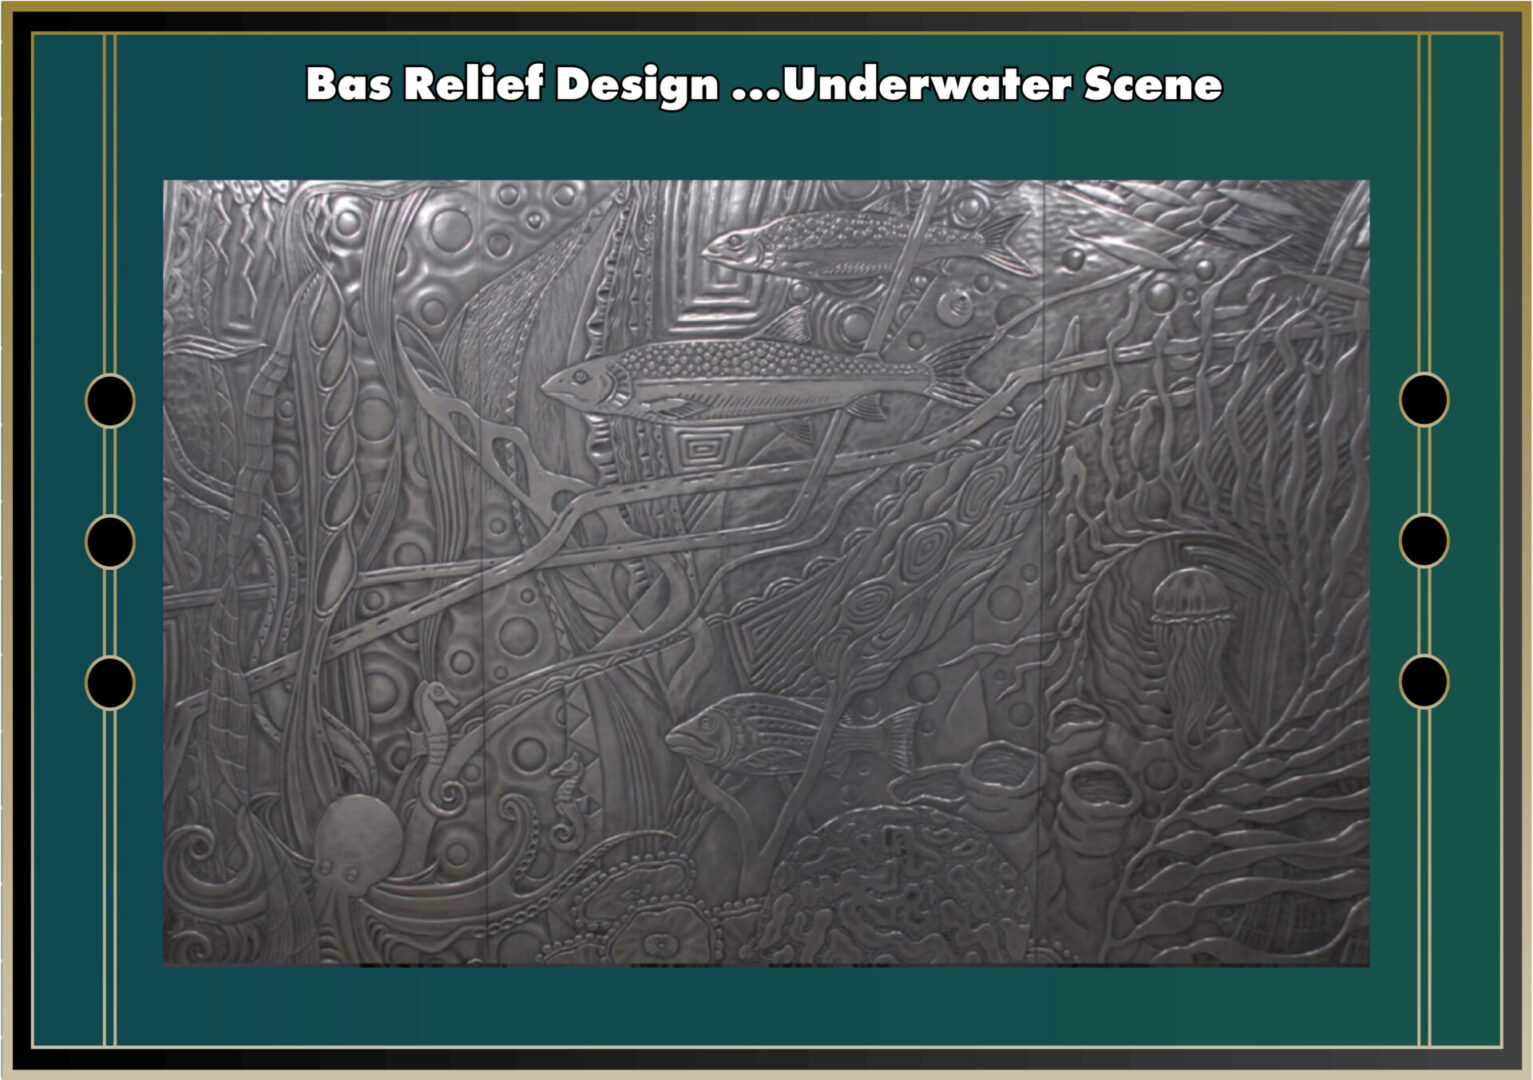 Bas Relief Design showing an underwater scene